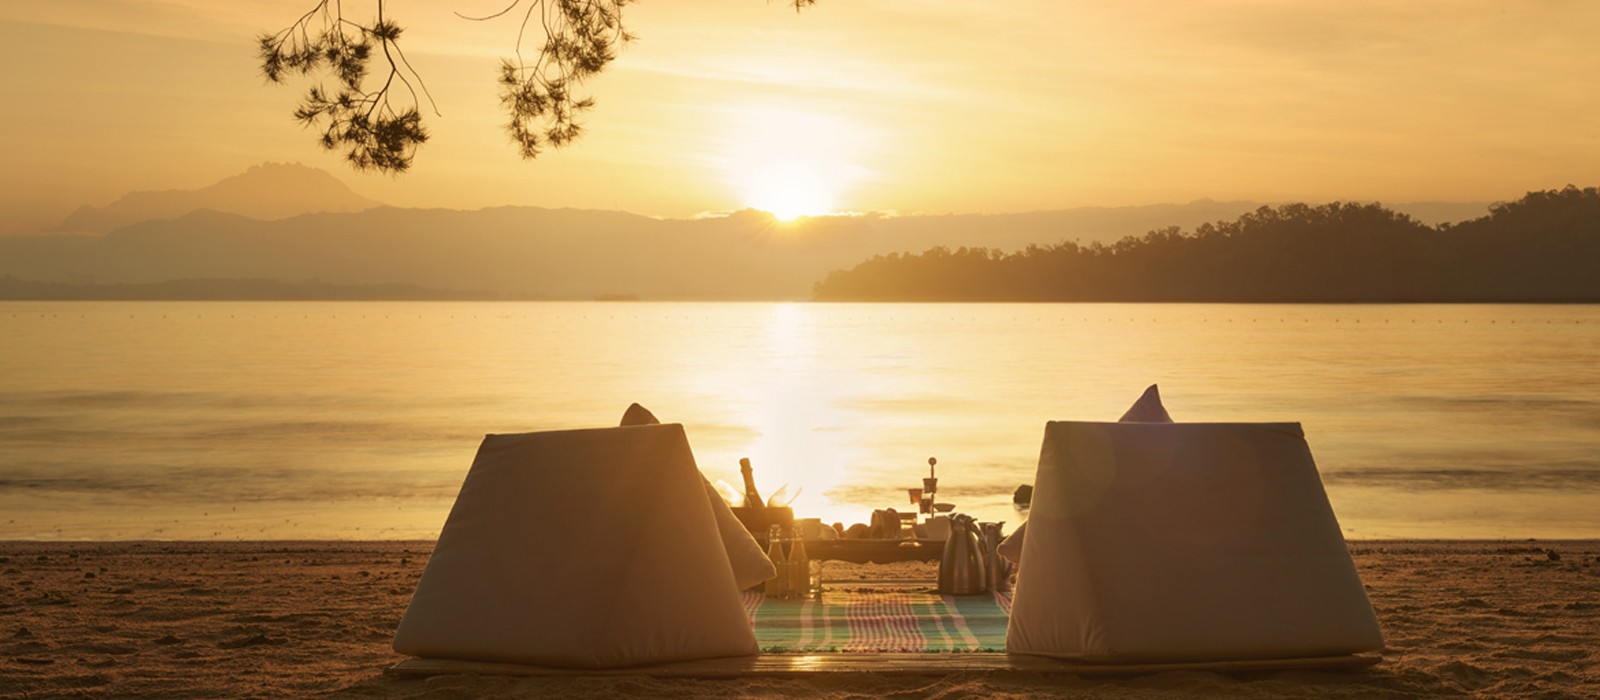 header - gaya island resort borneo - luxury borneo holiday packages